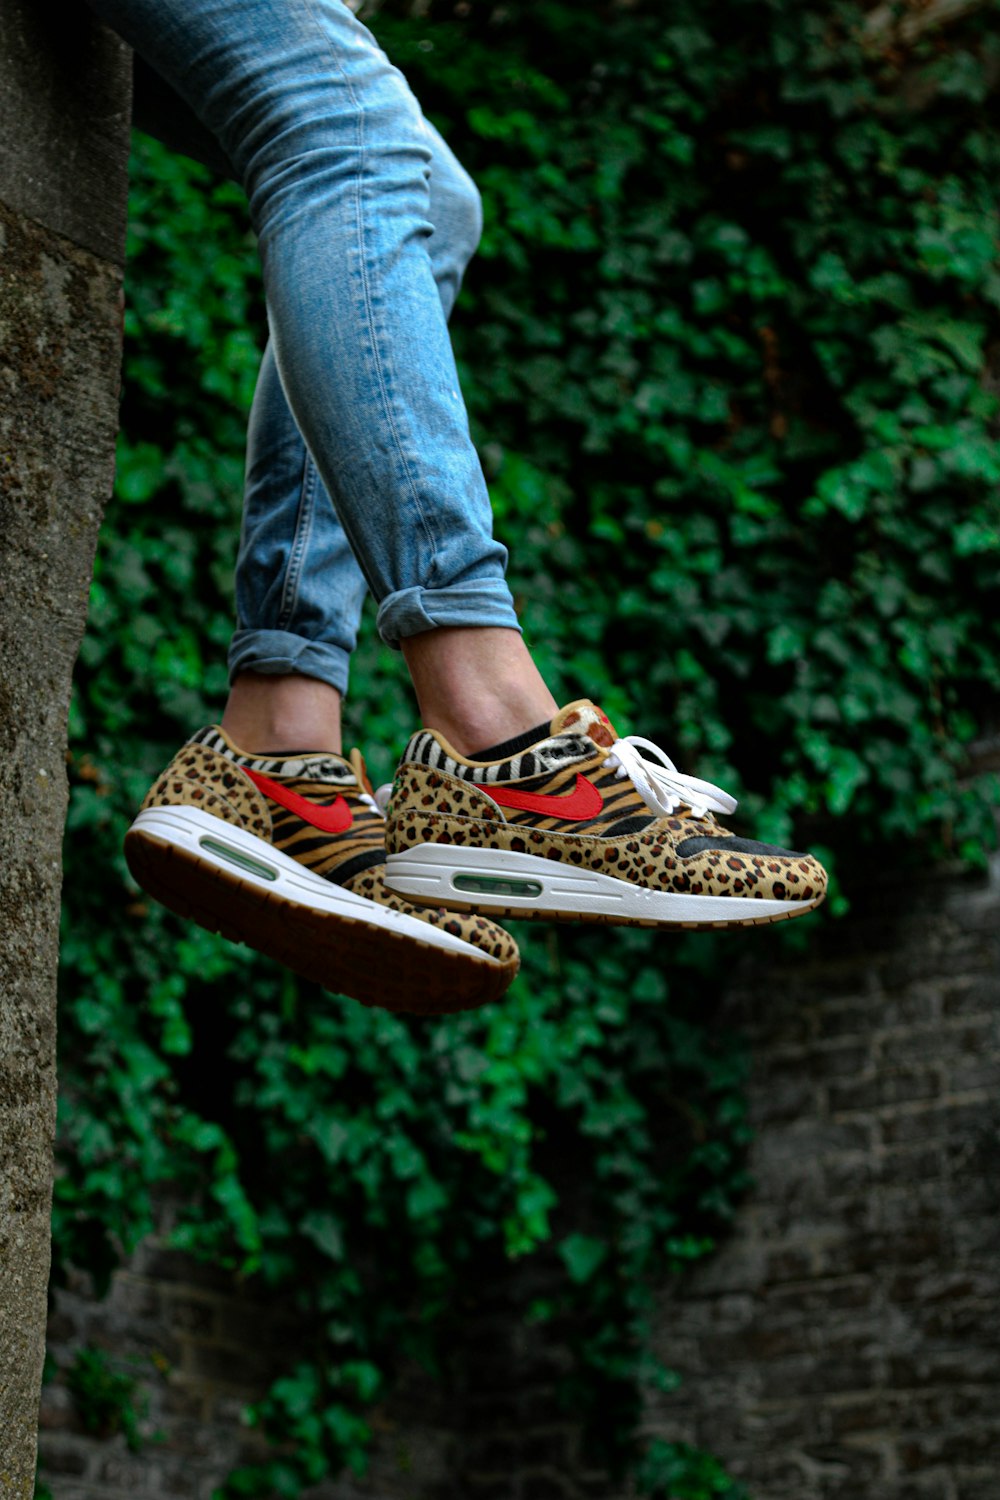 Person wearing leopard print sneakers photo – Free Shoe Image on Unsplash